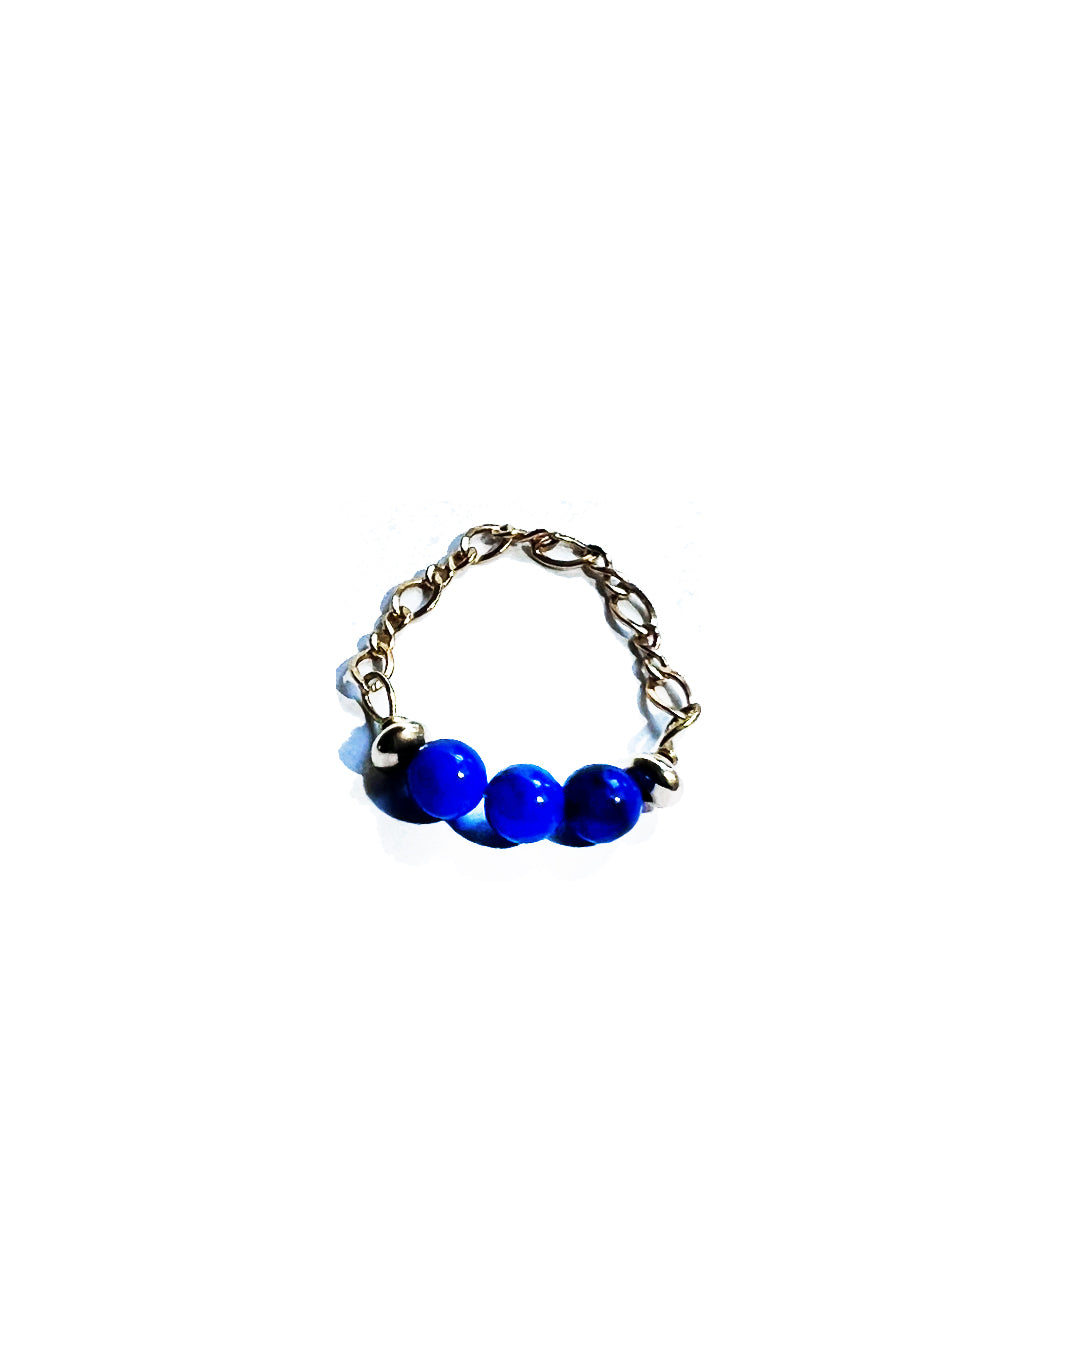 Semifine Lapis Lazuli Chain Ring | cukimber designs